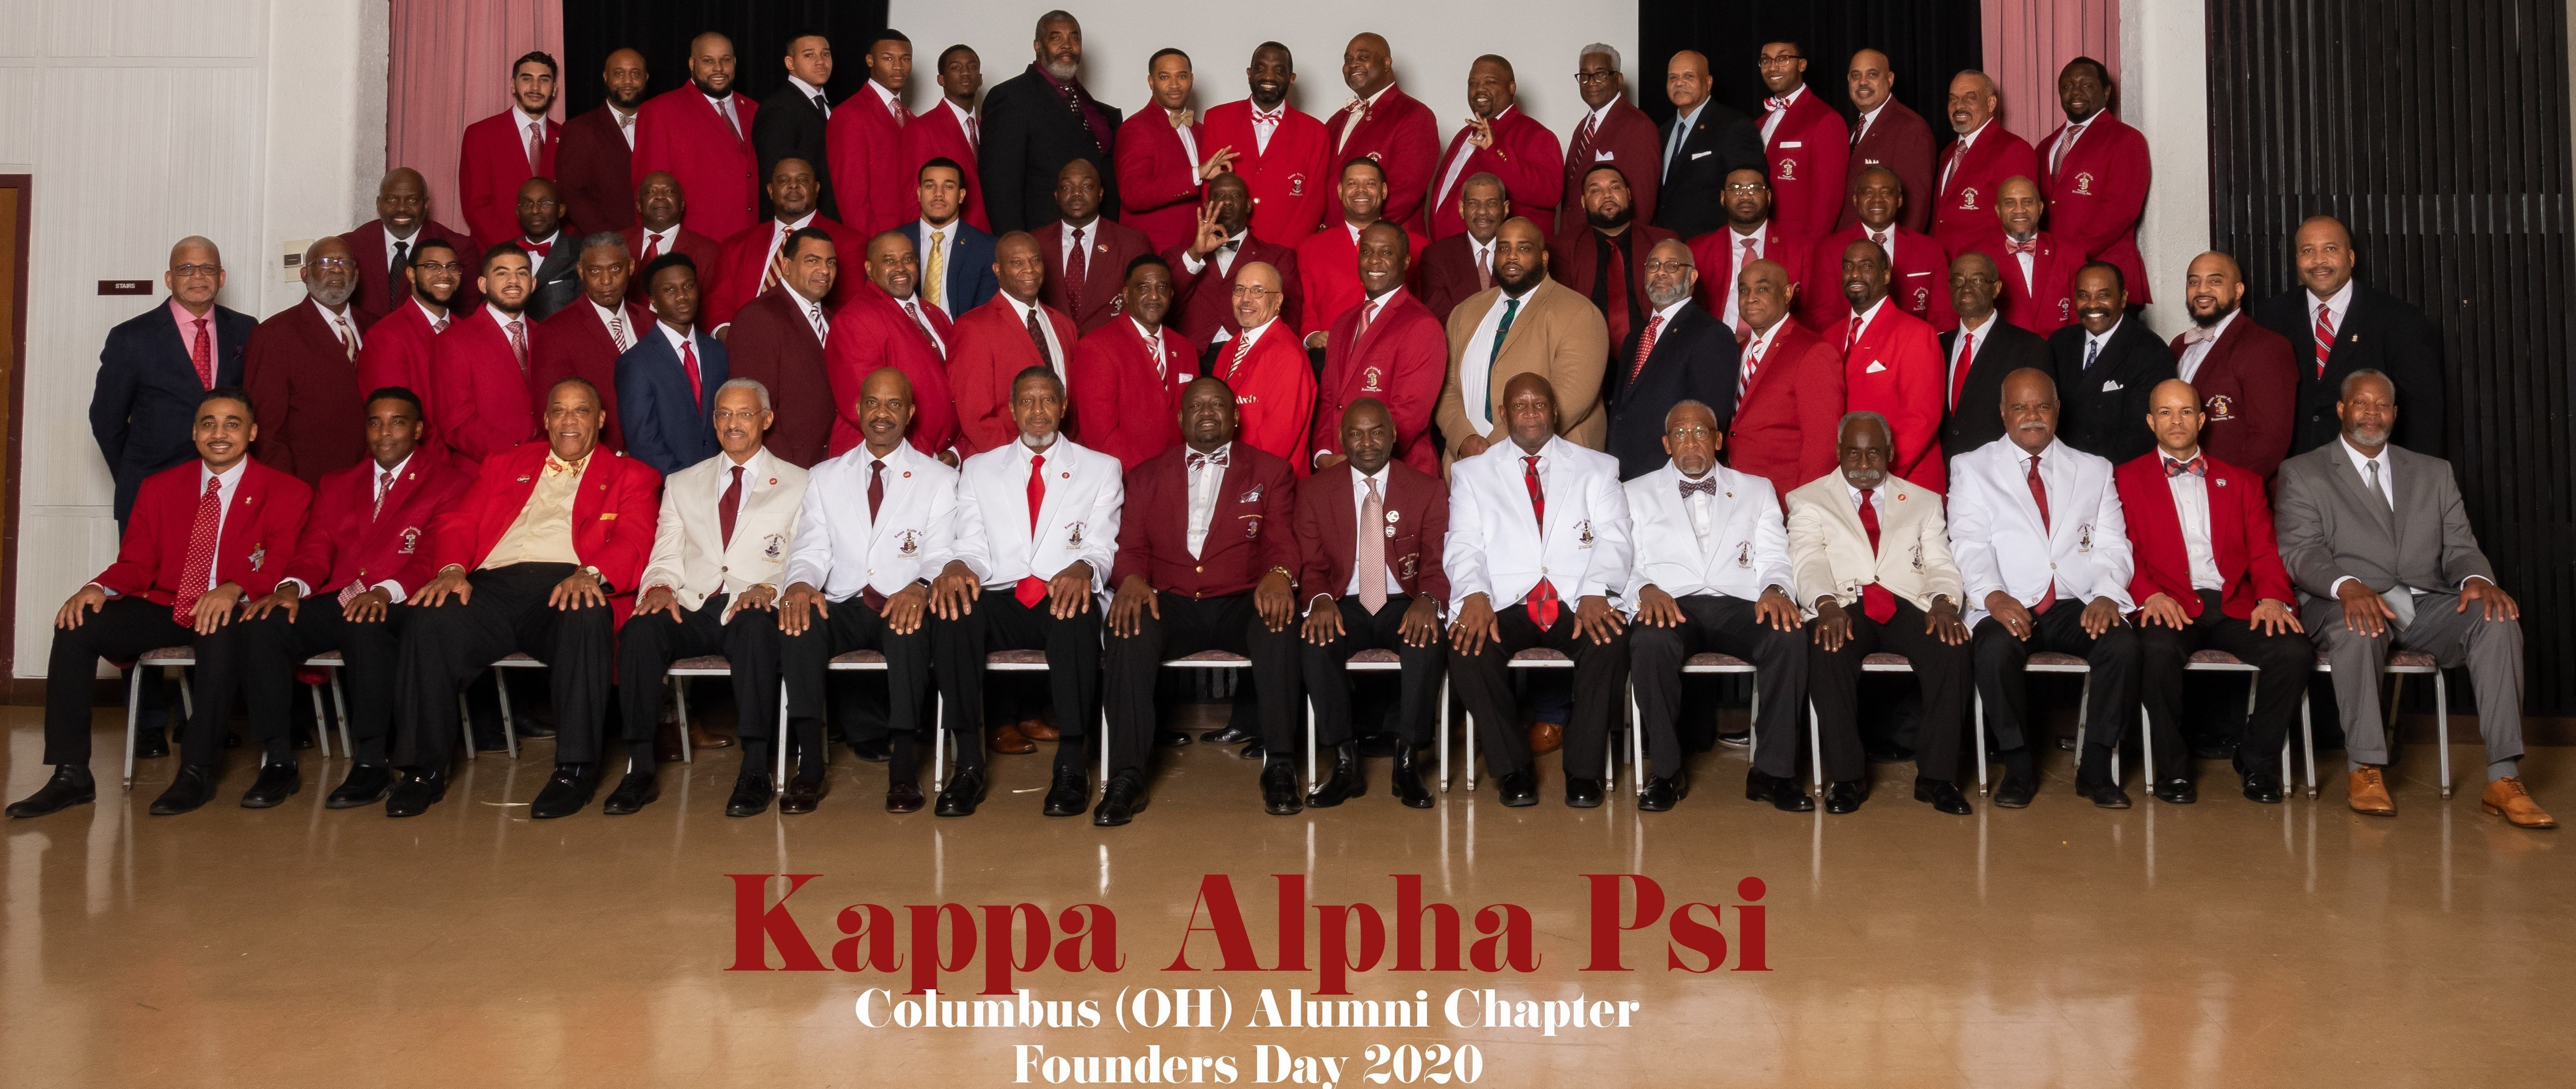 Kappa Alpha Psi - Columbus Alumni Chapter